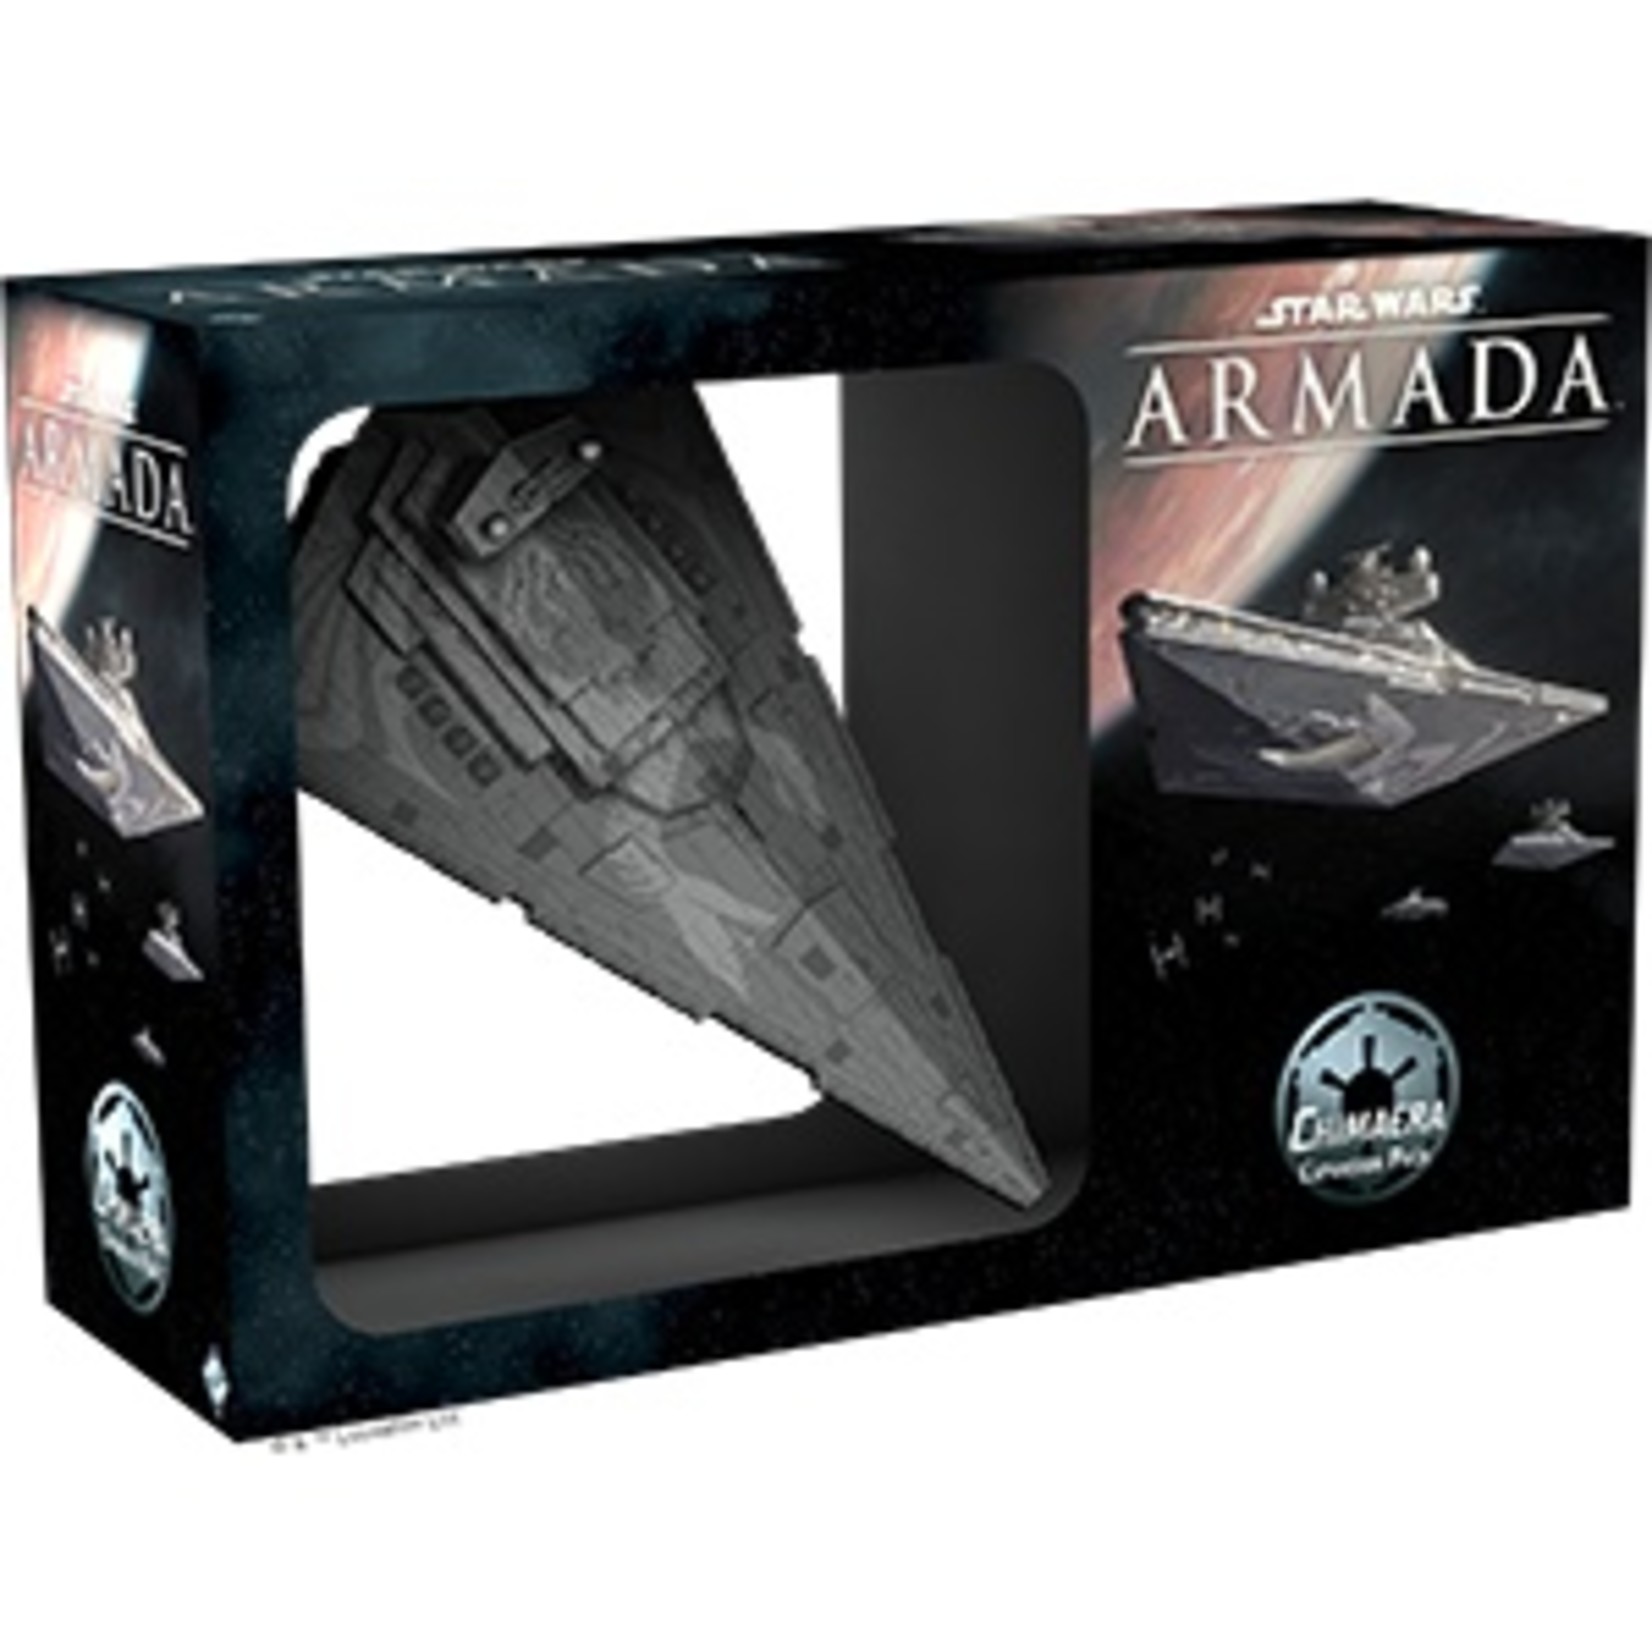 Fantasy Flight Games Star Wars: Armada - Chimaera Imperial Star Destroyer